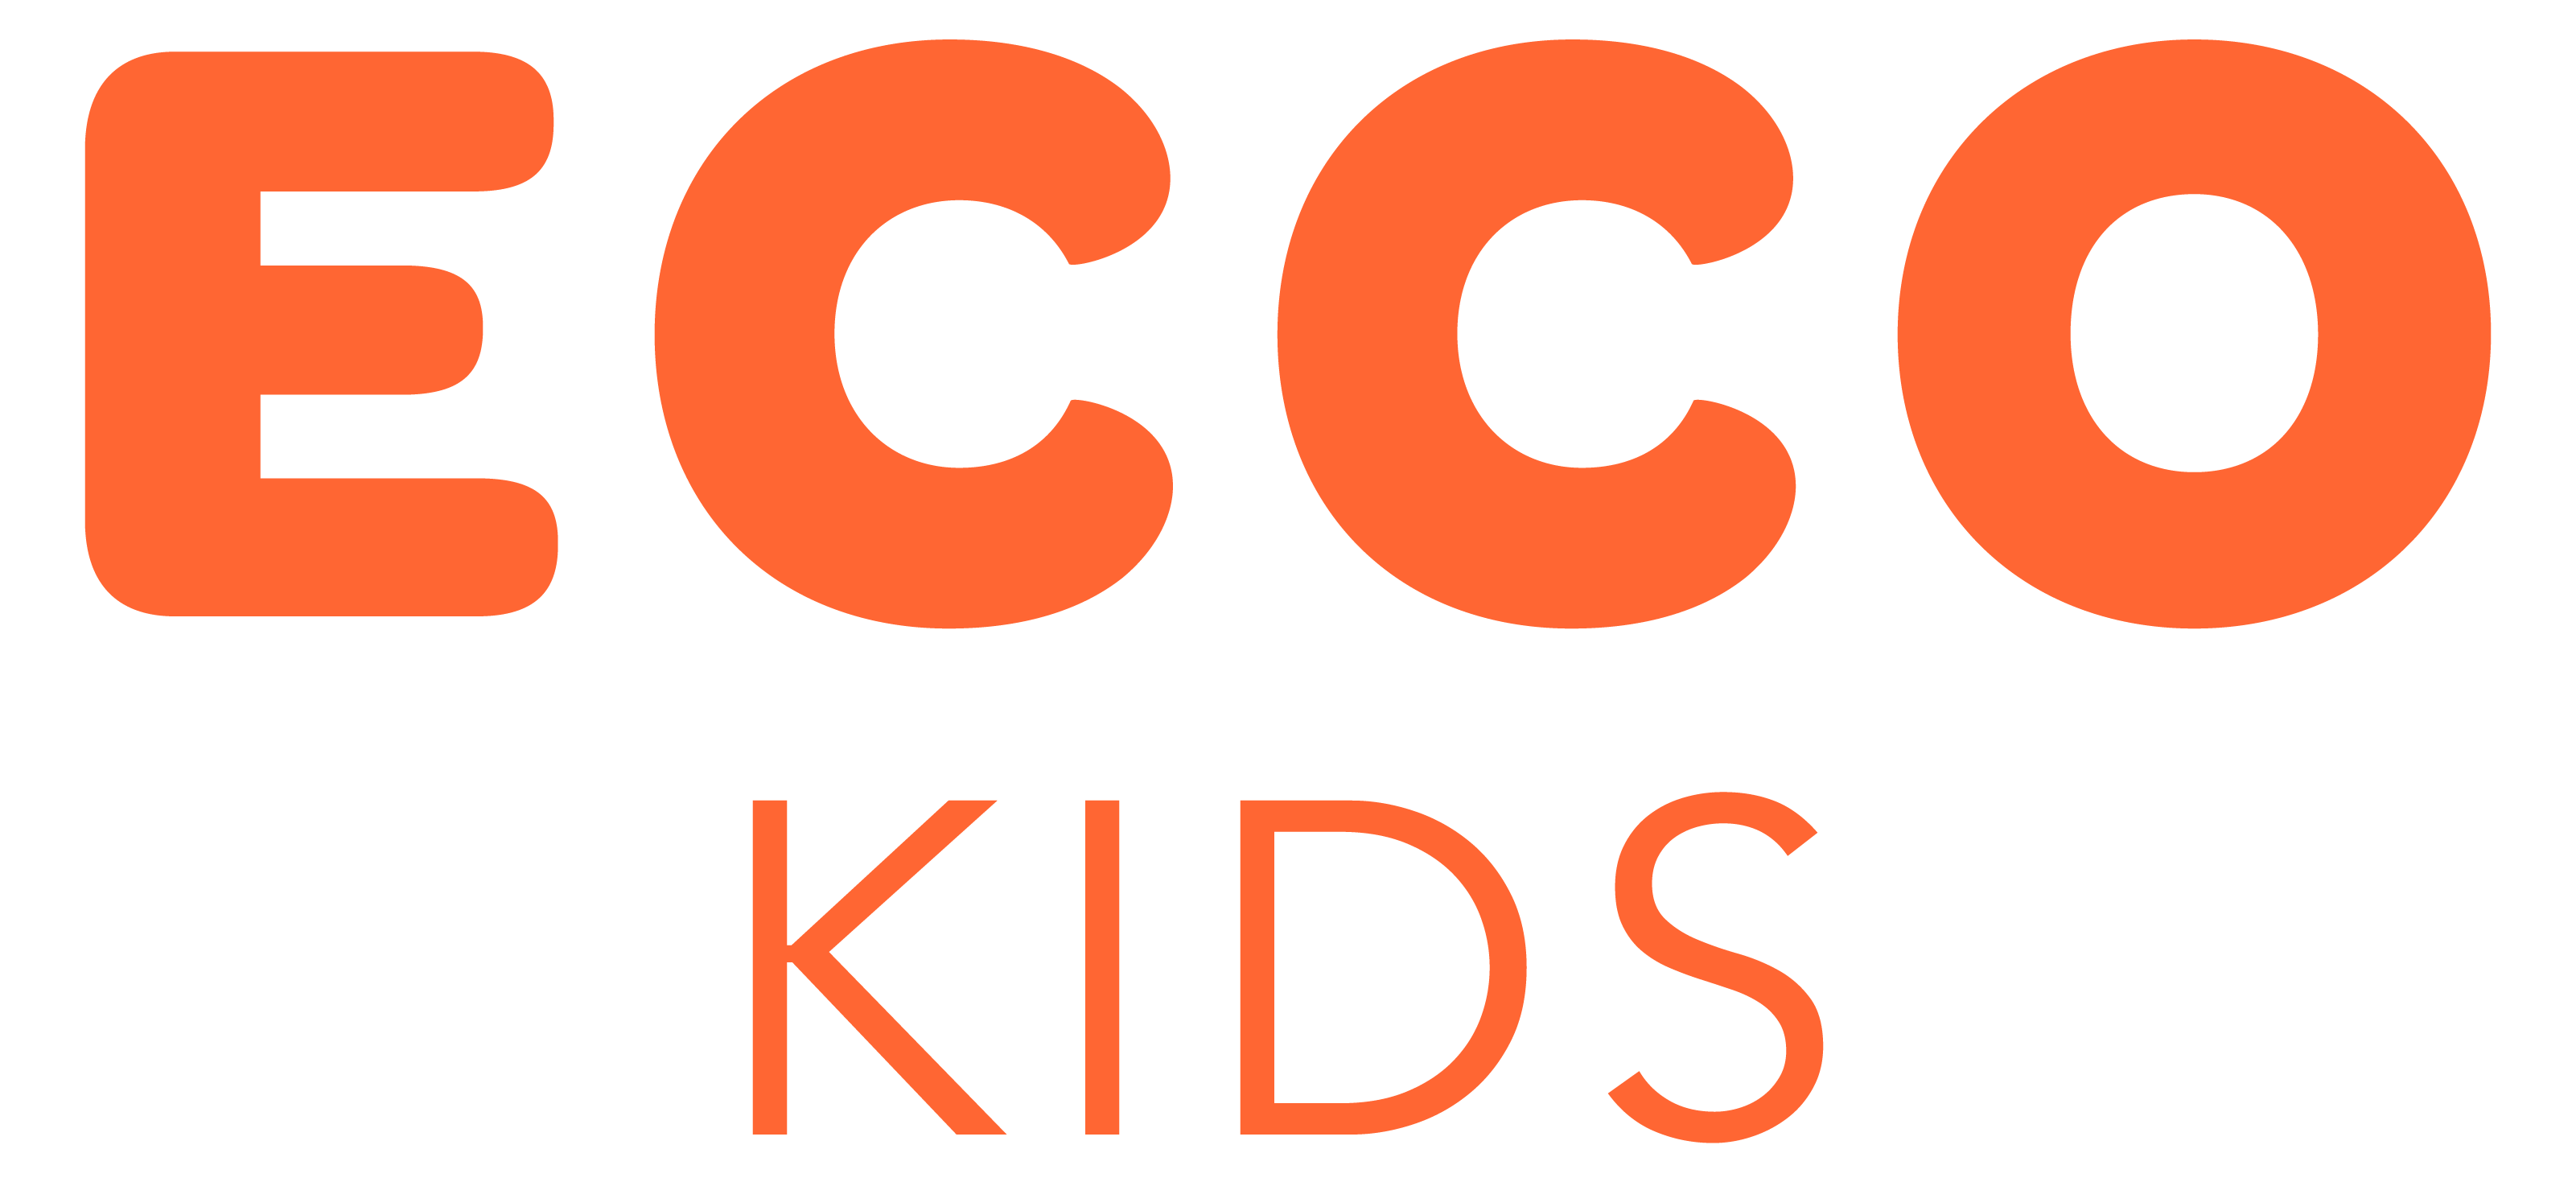 desinfektionsmiddel Violin Fugtig ECCO Kids - Engaging Childcare | Experience Community Church